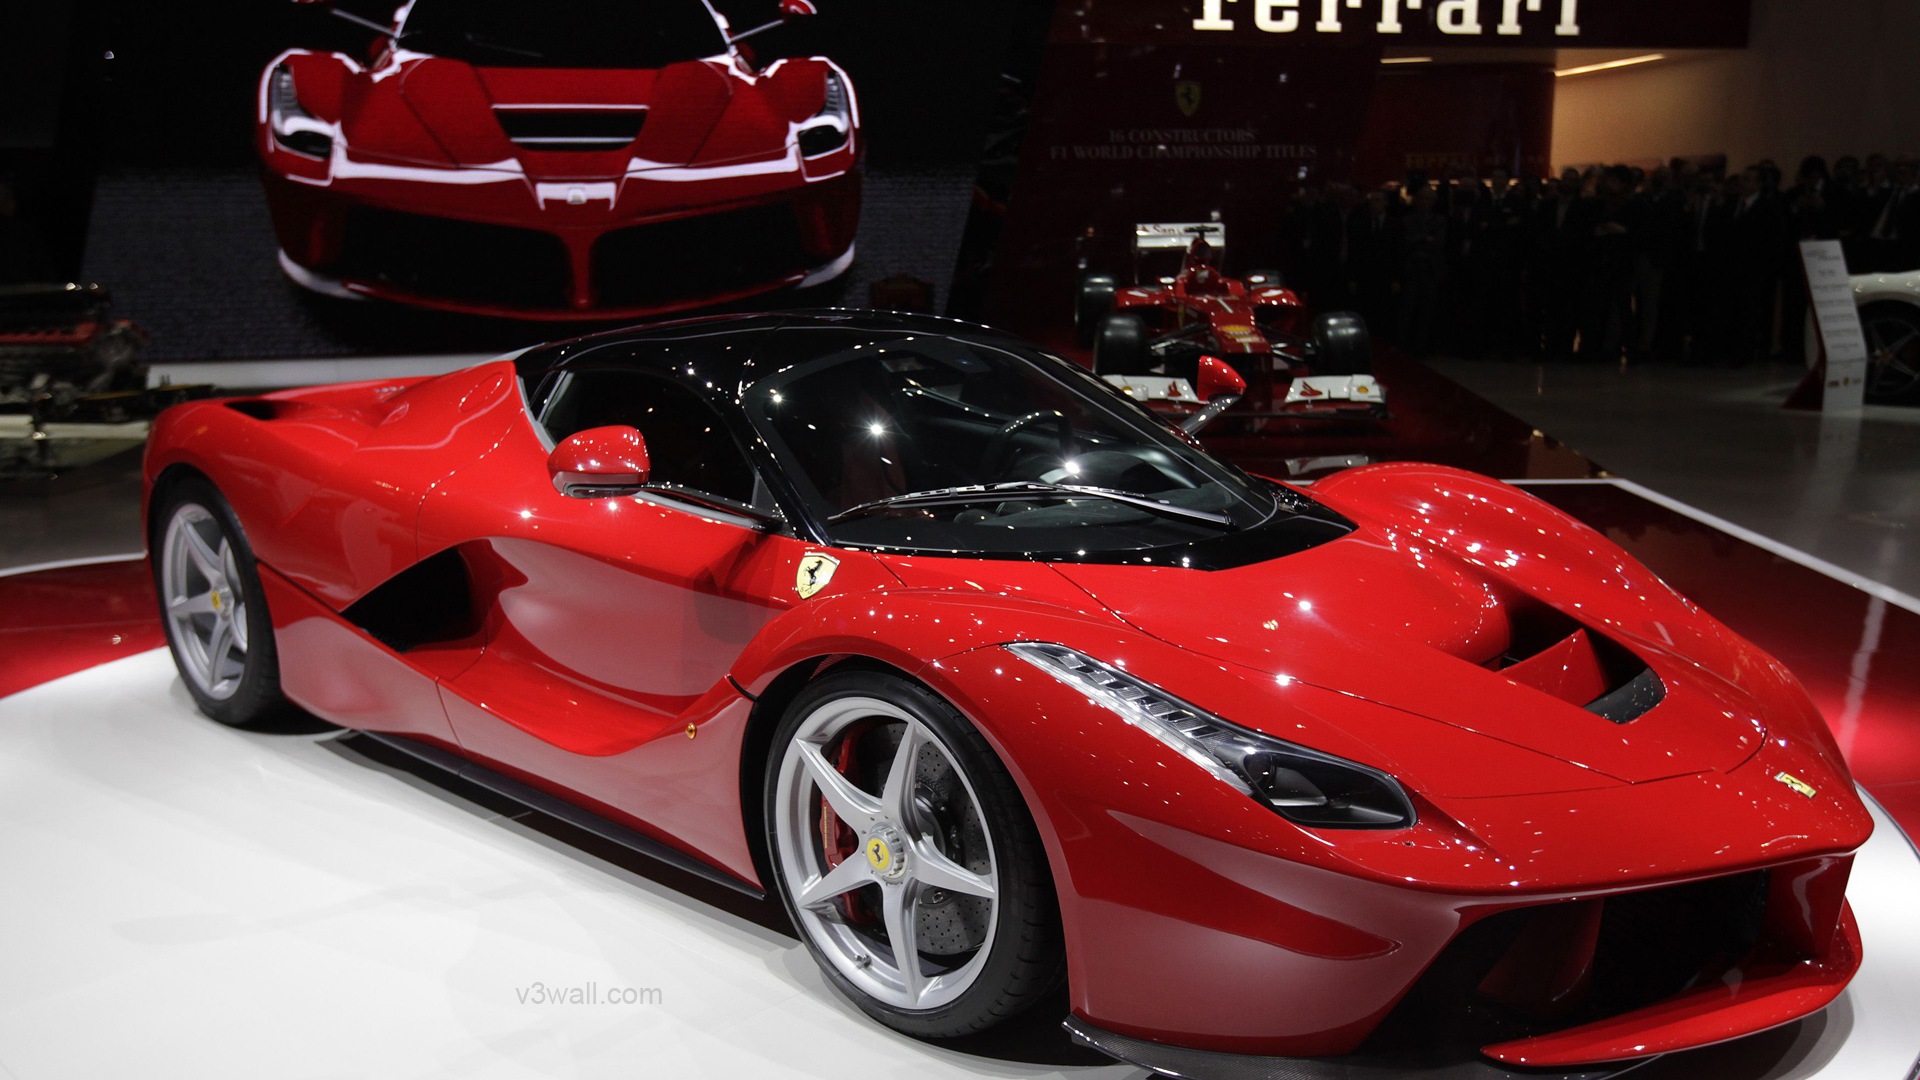 2013 Ferrari LaFerrari red supercar HD Wallpaper #2 - 1920x1080